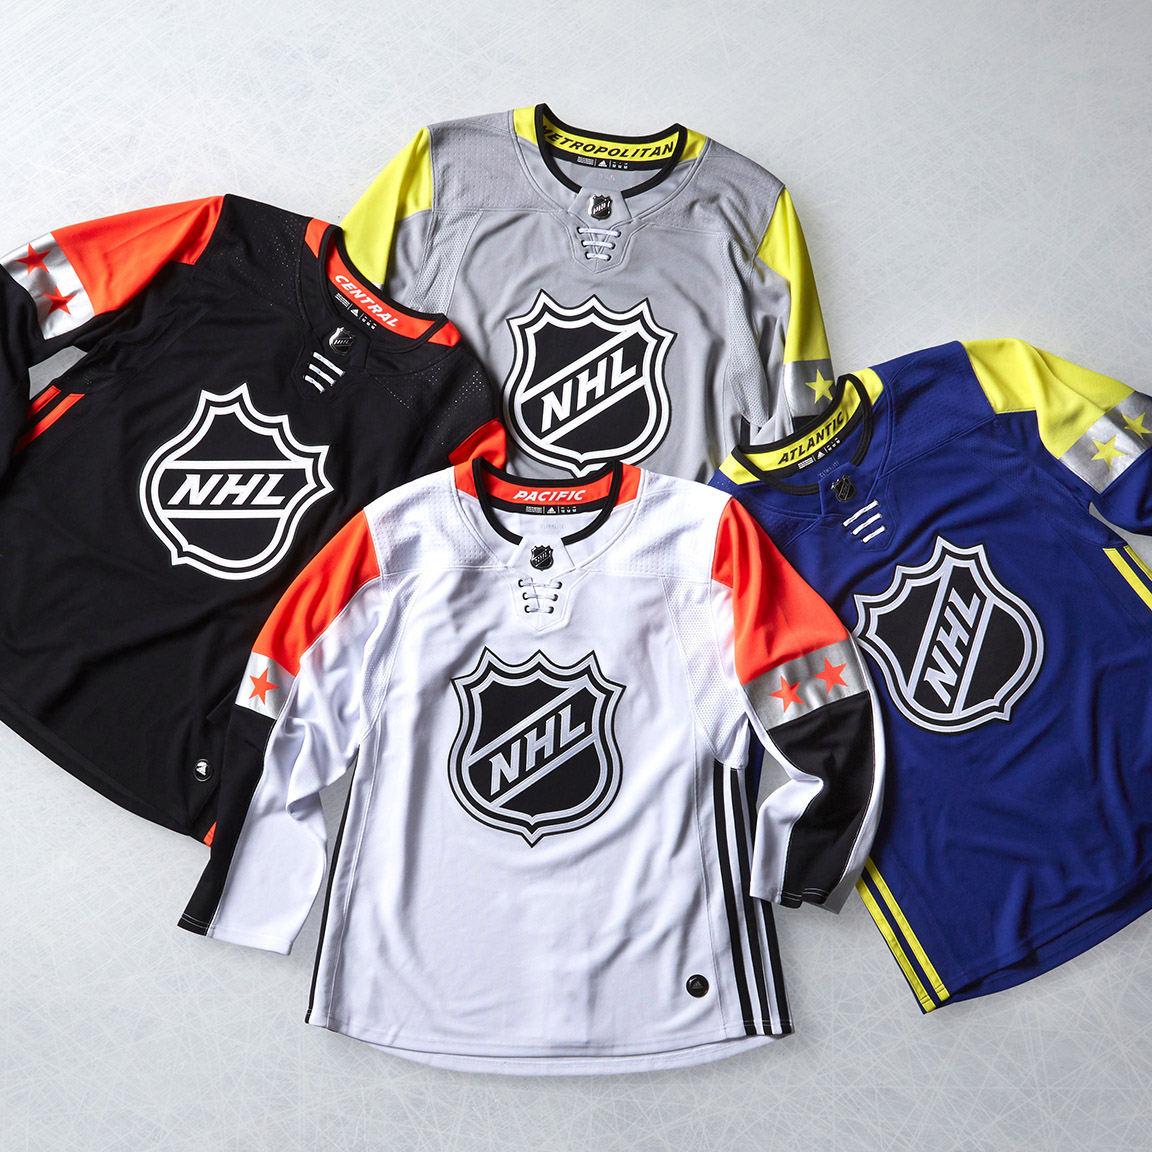 NHL unveils 2018 All-Star jerseys! —